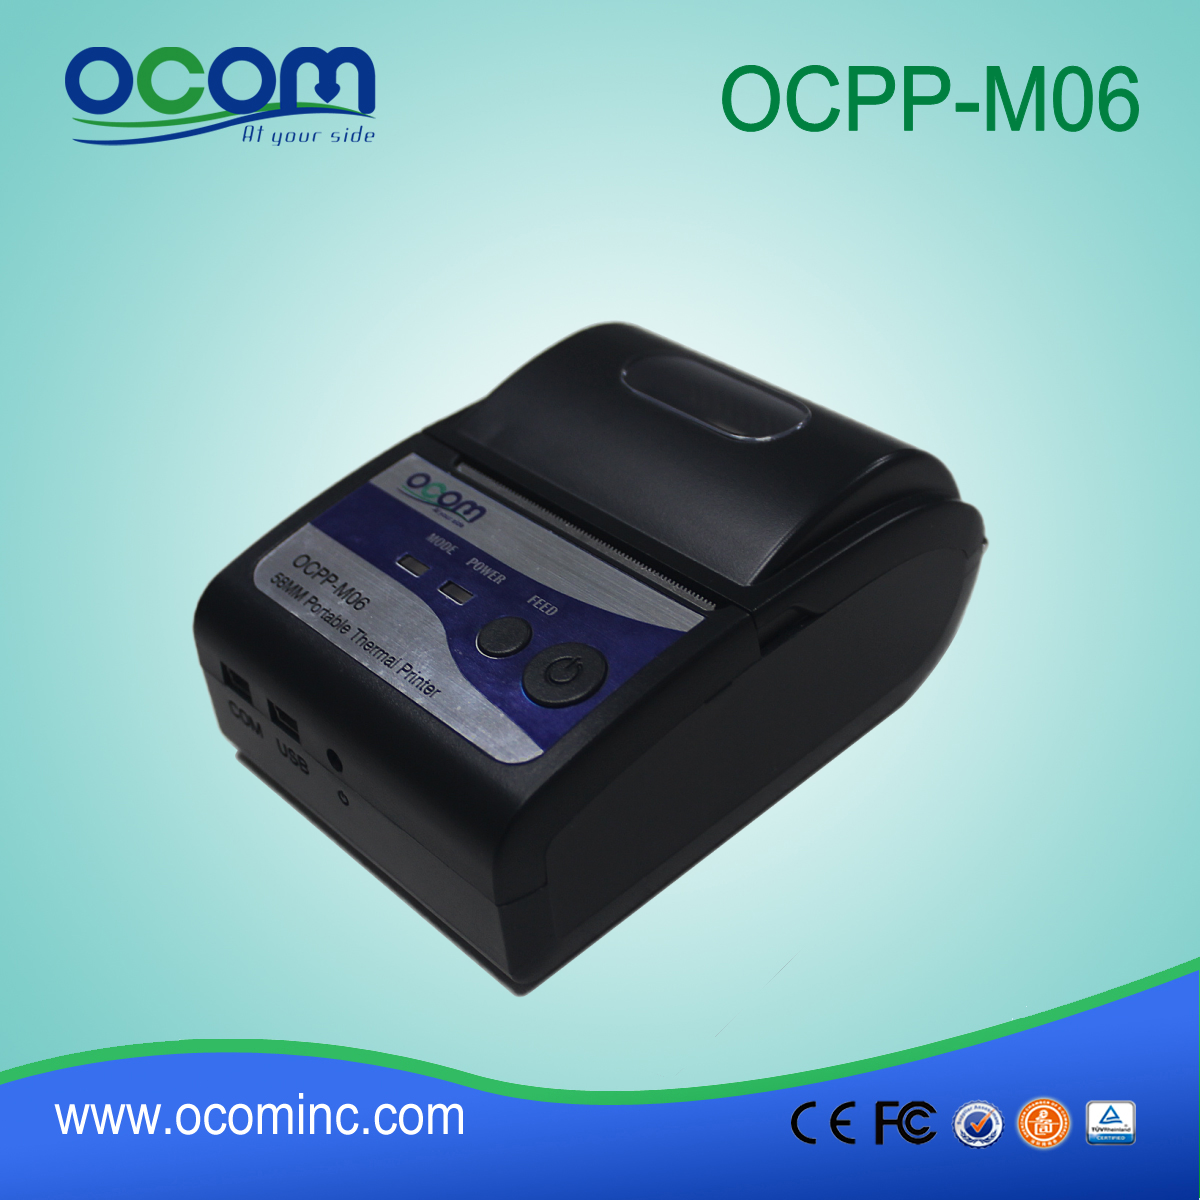 (OCPP-M06) OCOM 2015 الساخن بيع طابعة المحمولة الروبوت، الطابعة المحمولة للبيع